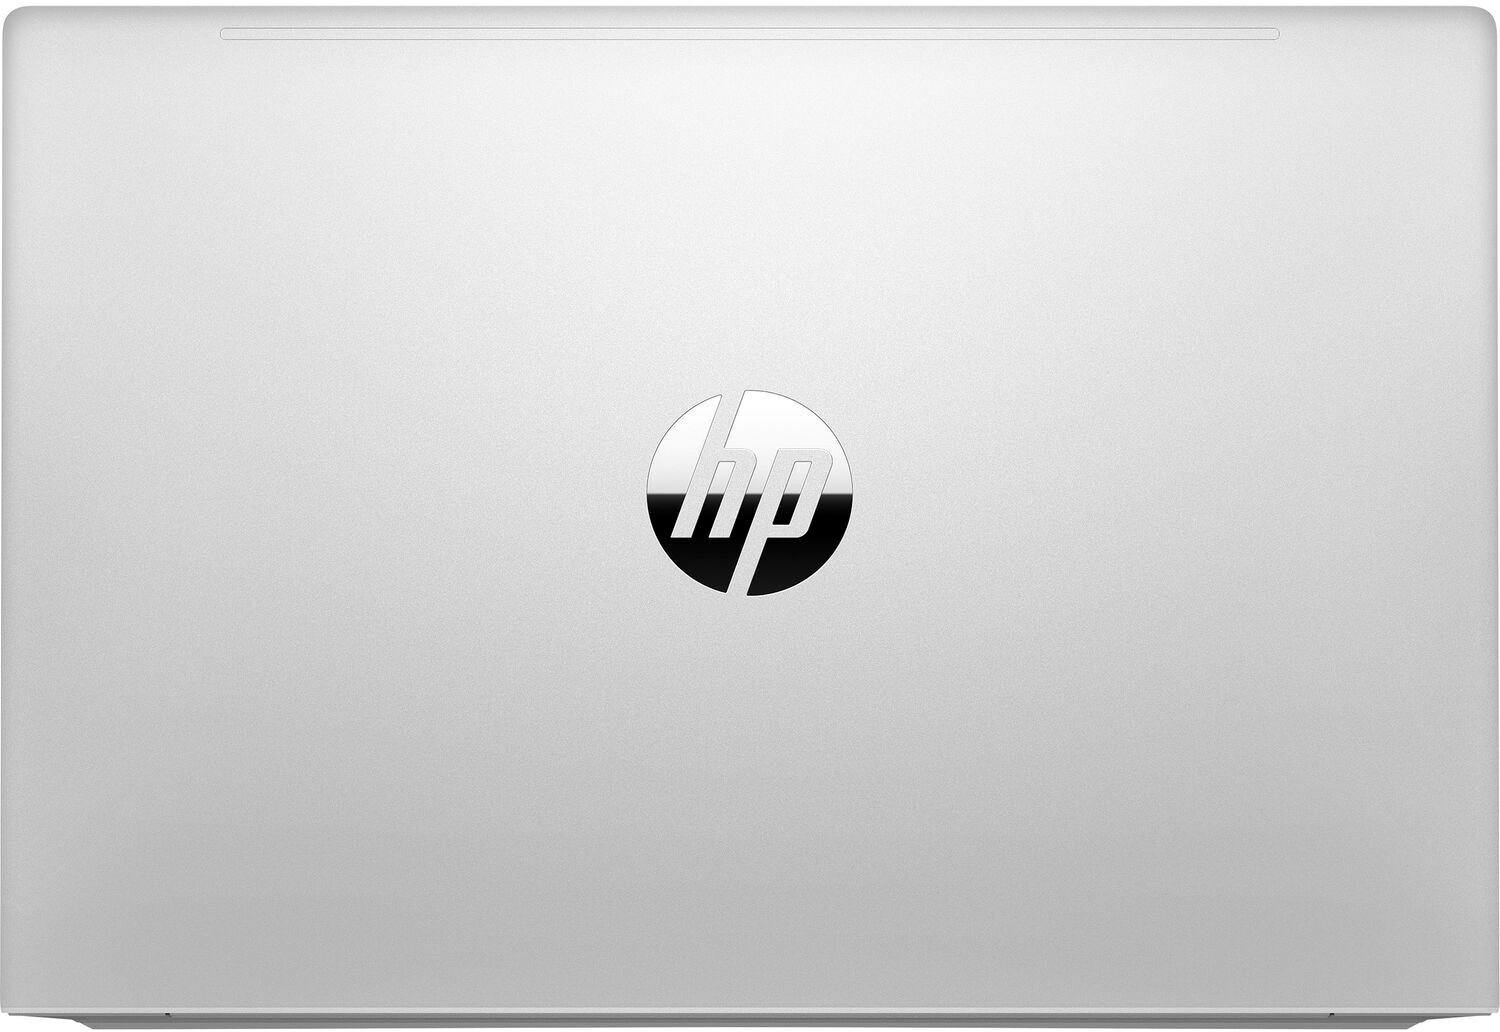 Ноутбук HP НP ProBook 430 G8 Core i7-1165G7 2.8GHz, 13.3 FHD (1920x1080) AG 8GB DDR4 (1),512GB SSD,45Wh LL,Service Door,FPR,1.5kg,1y,Silver,DOS-39393